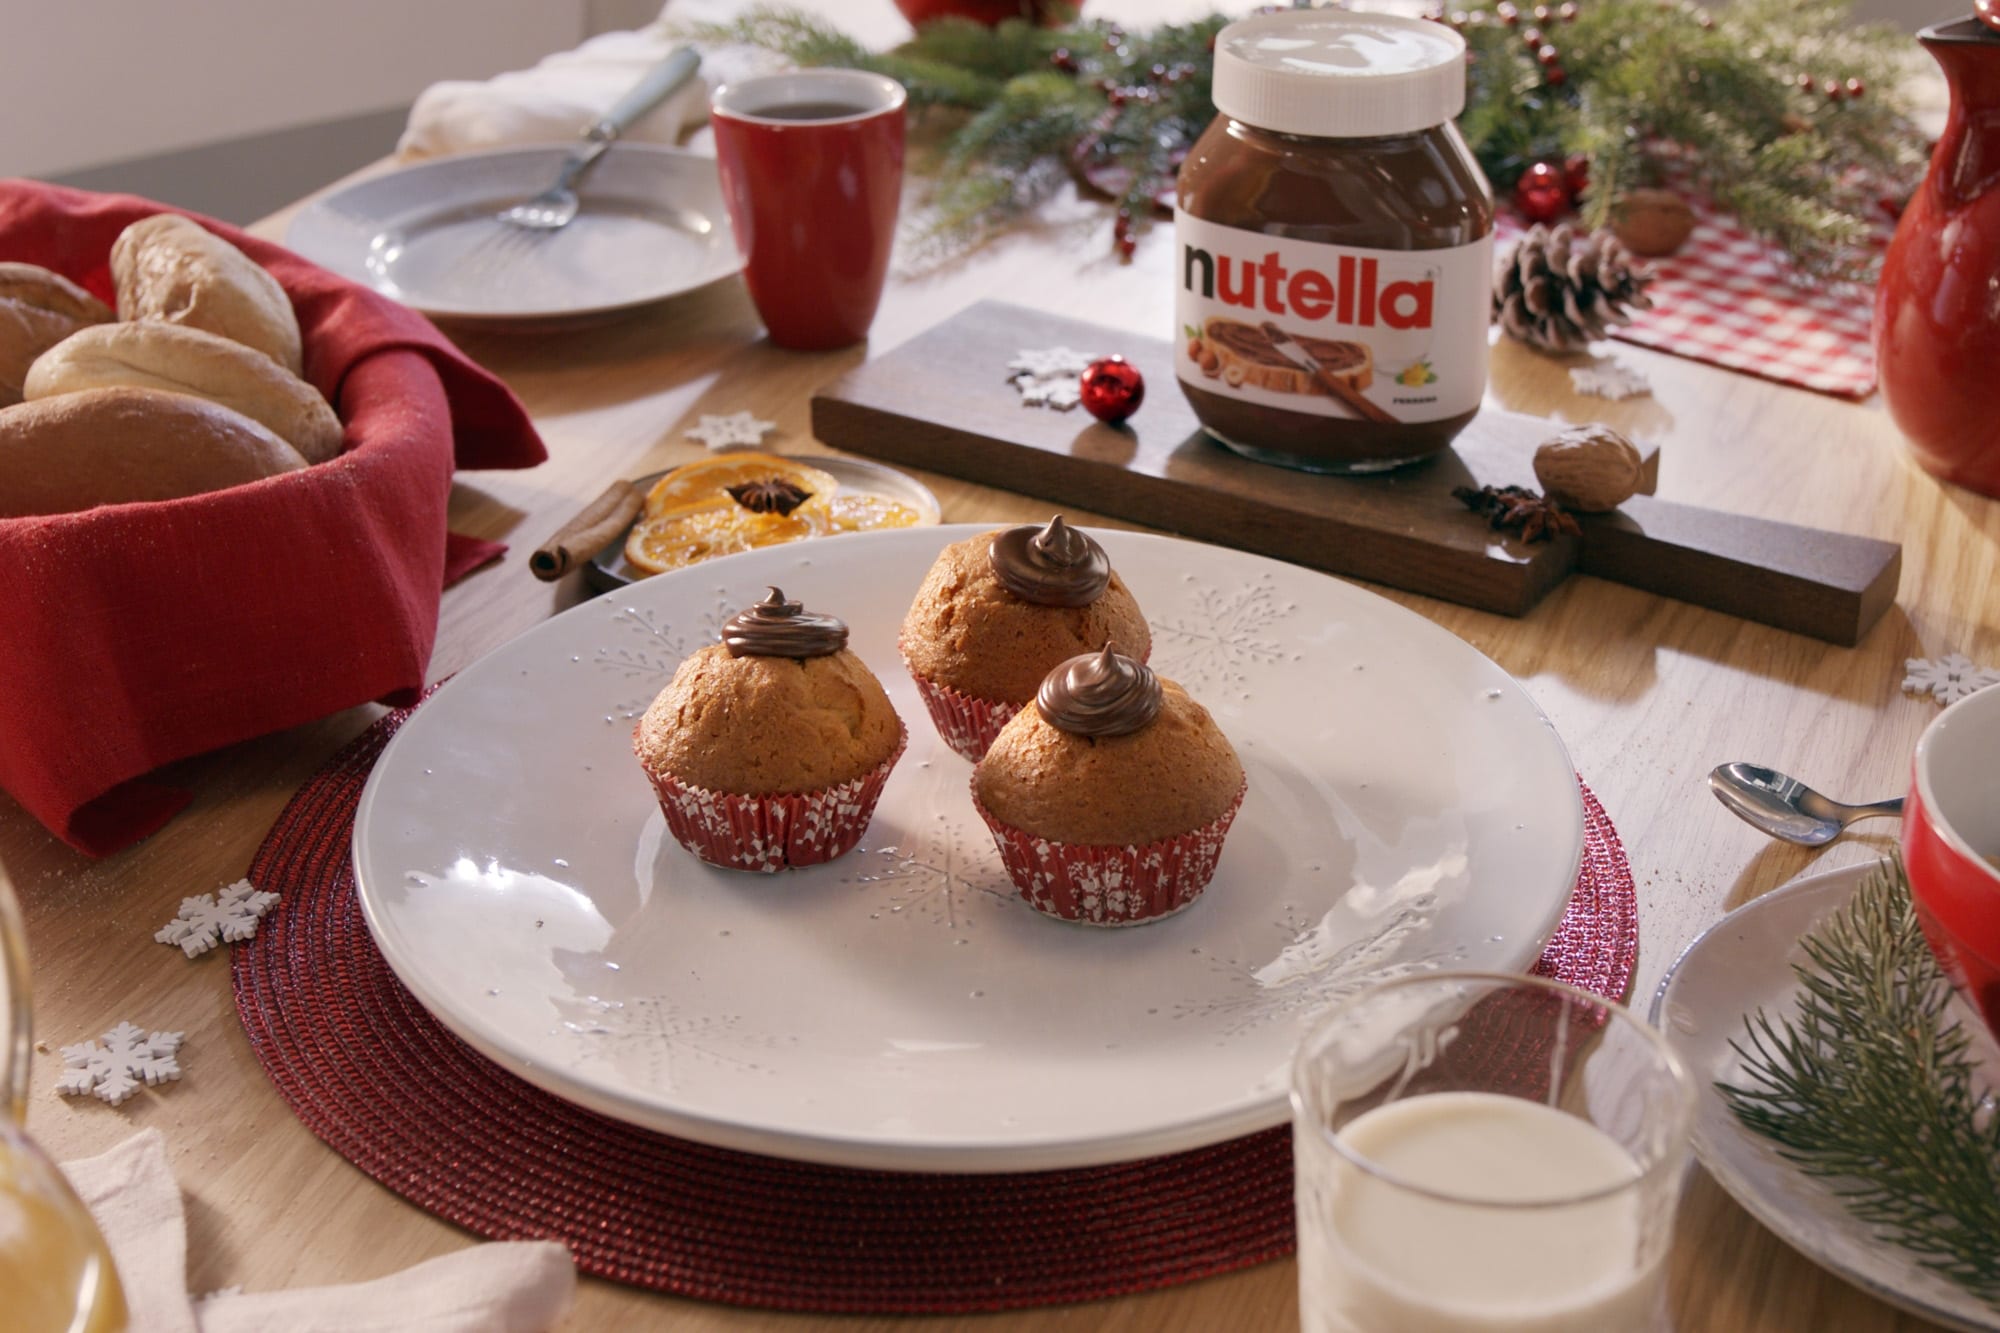  Nutella®'lı Muffin tarifi 